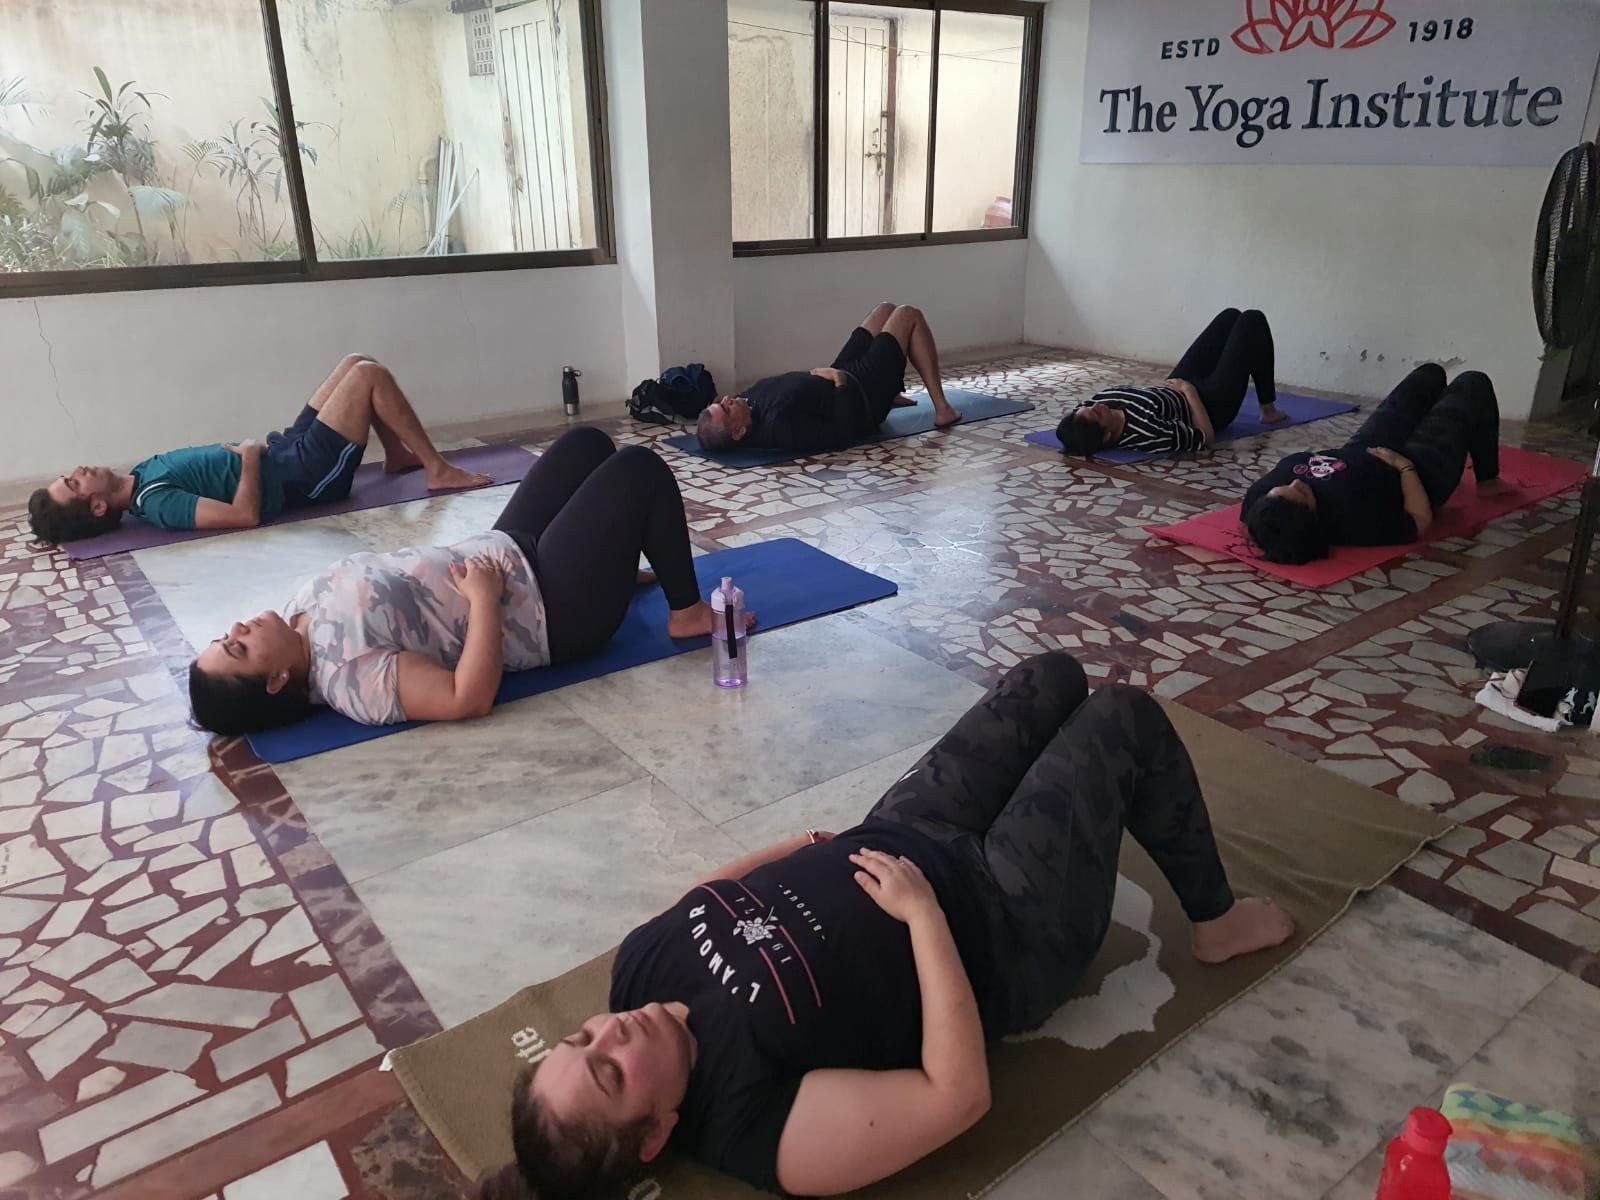 Yoga Instructors Lokhkandwala, Andheri West Yoga Female Yoga Teacher